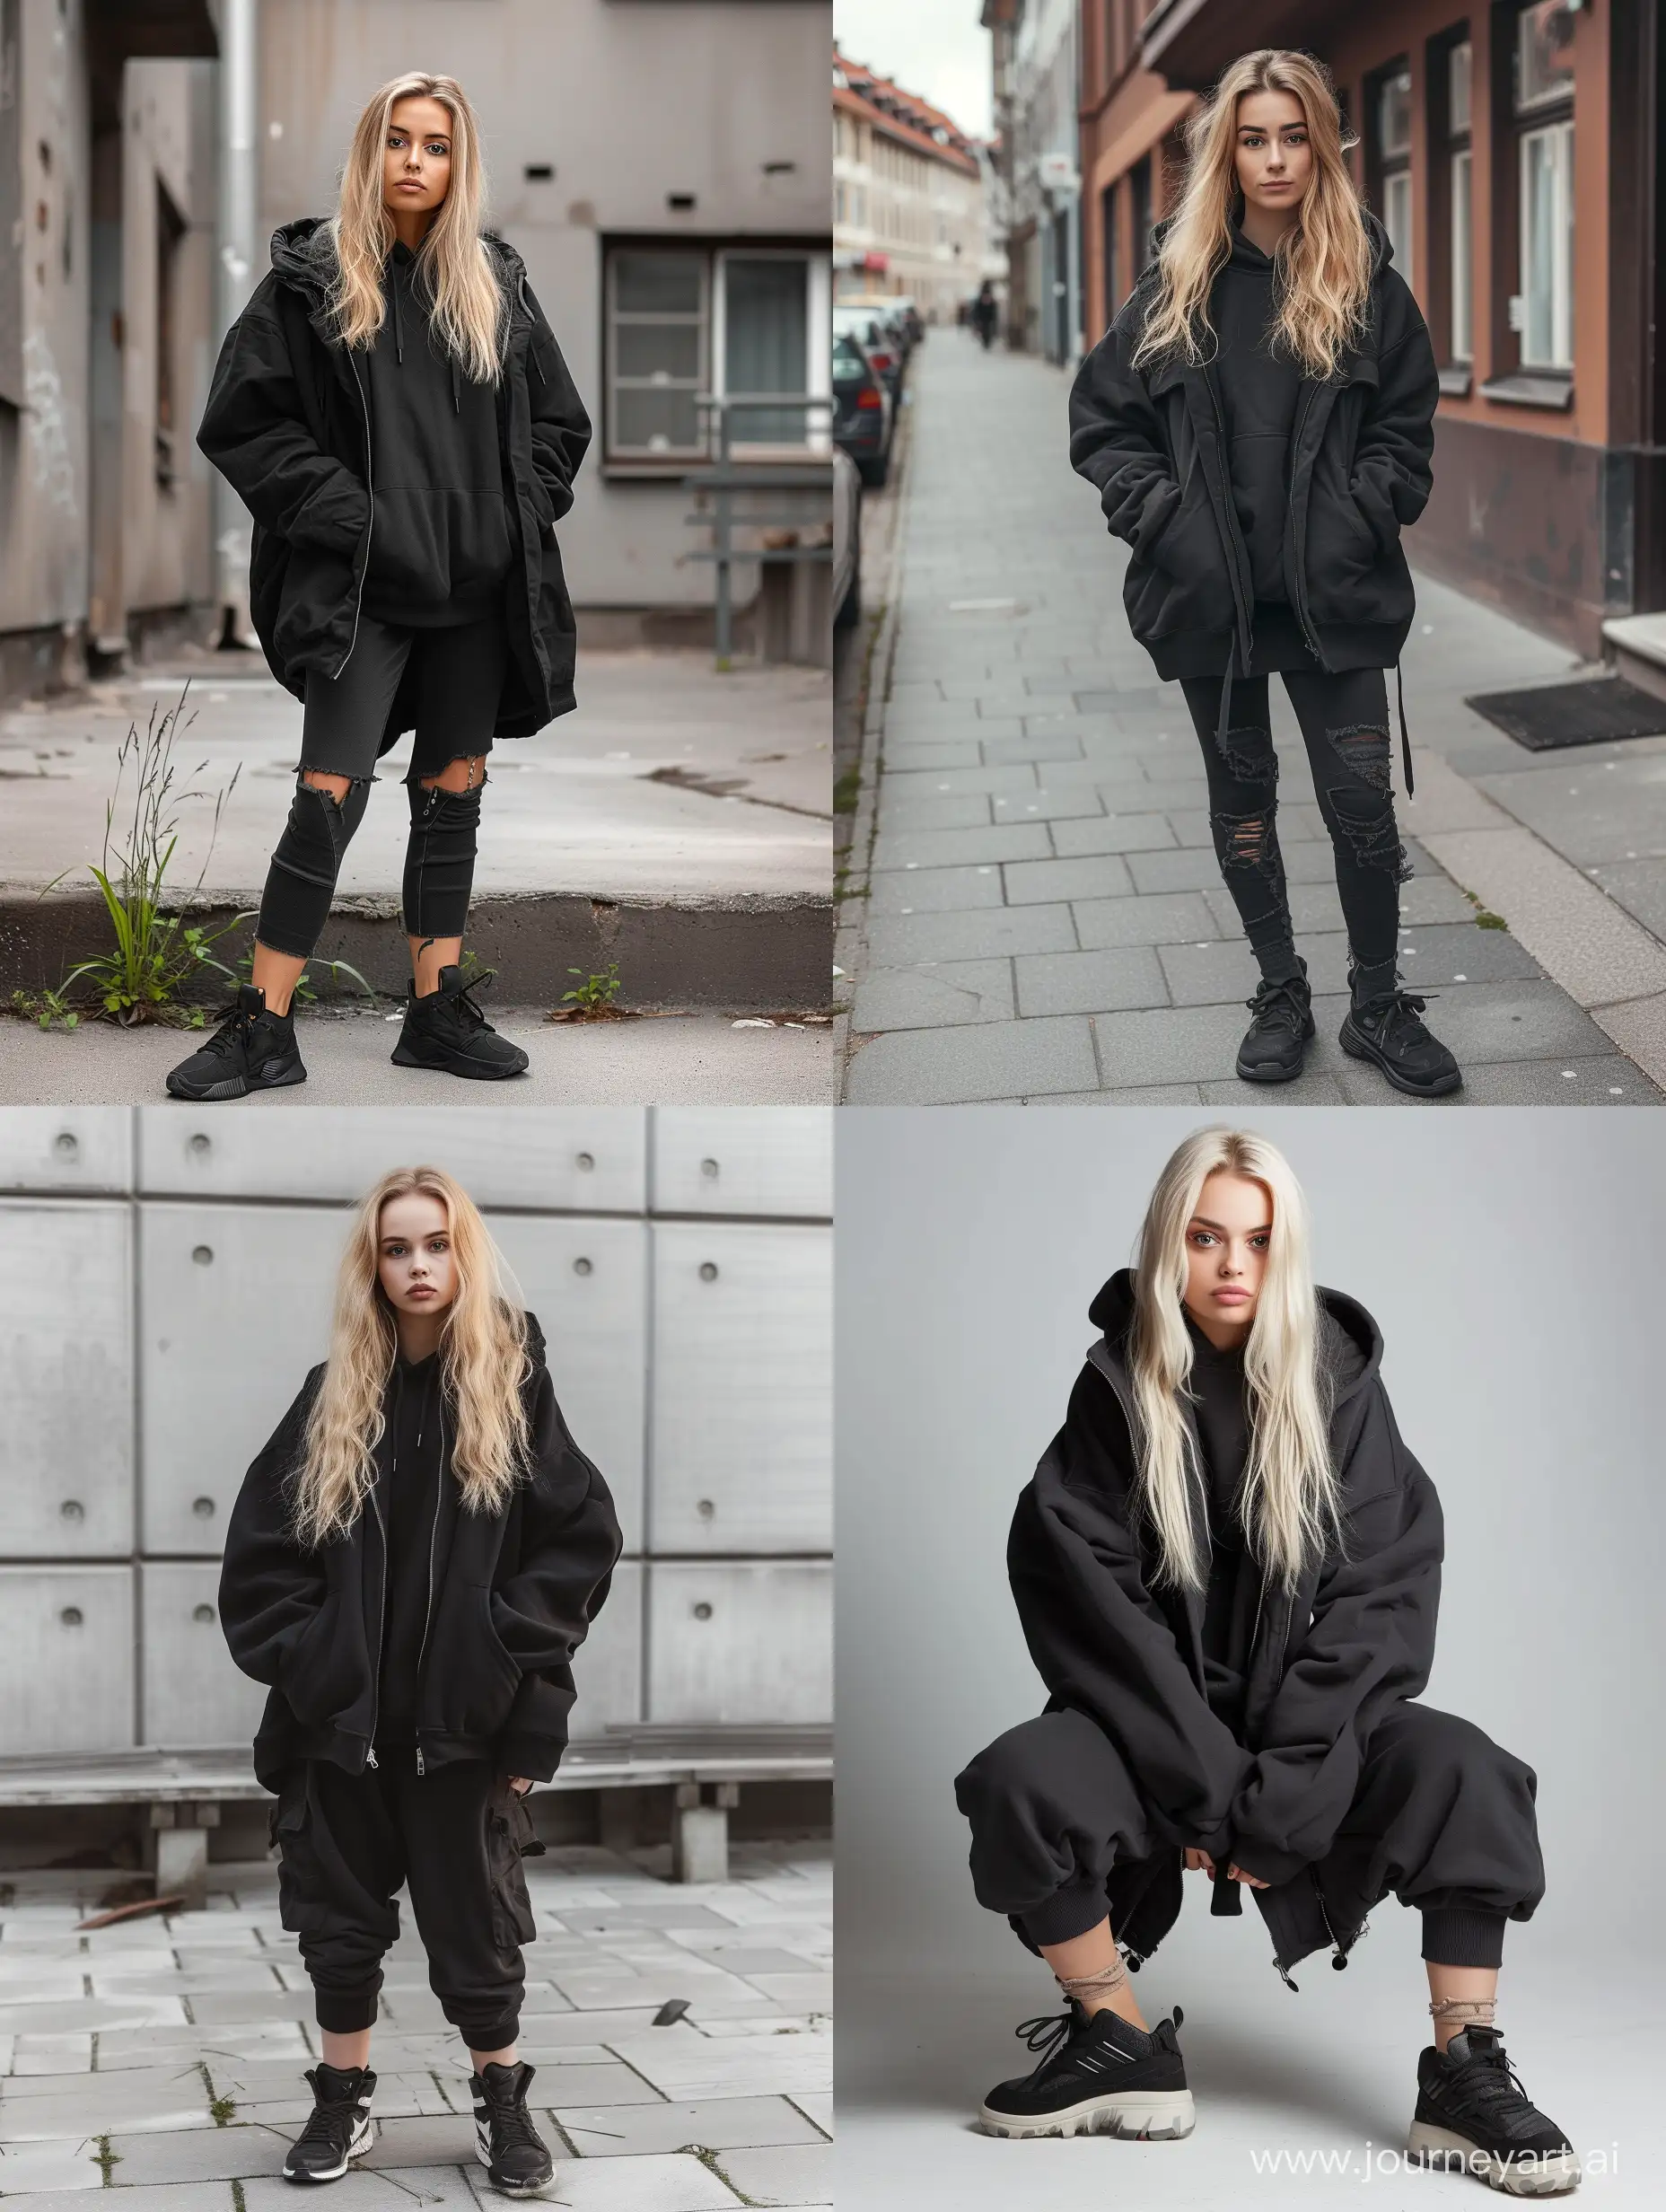 Fashionable-Blonde-Model-in-Black-Sweatshirt-and-Jacket-with-Stylish-Shoes